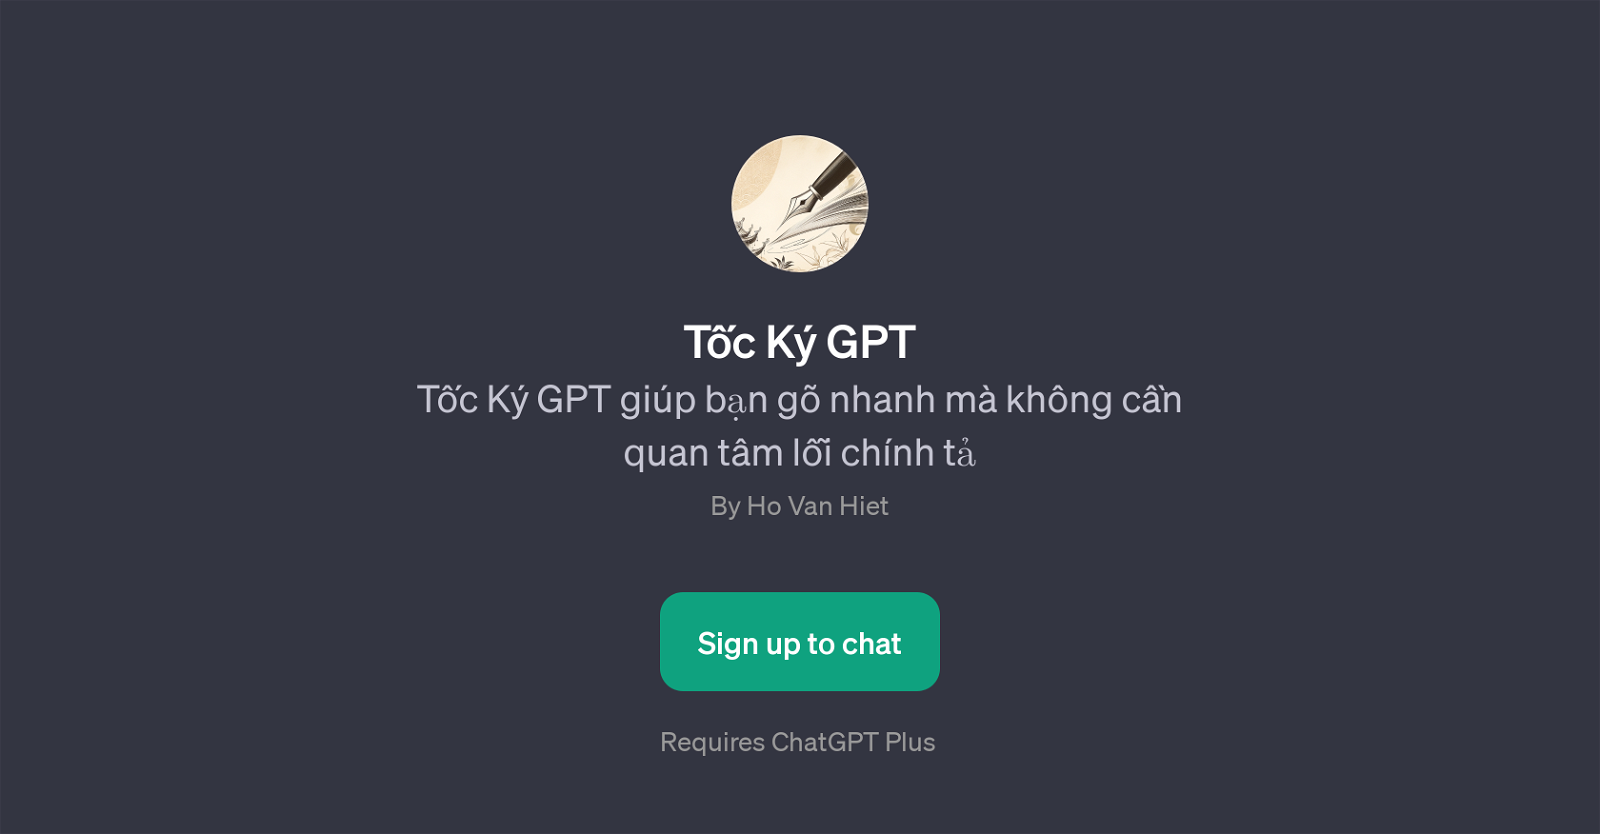 Tc K GPT website